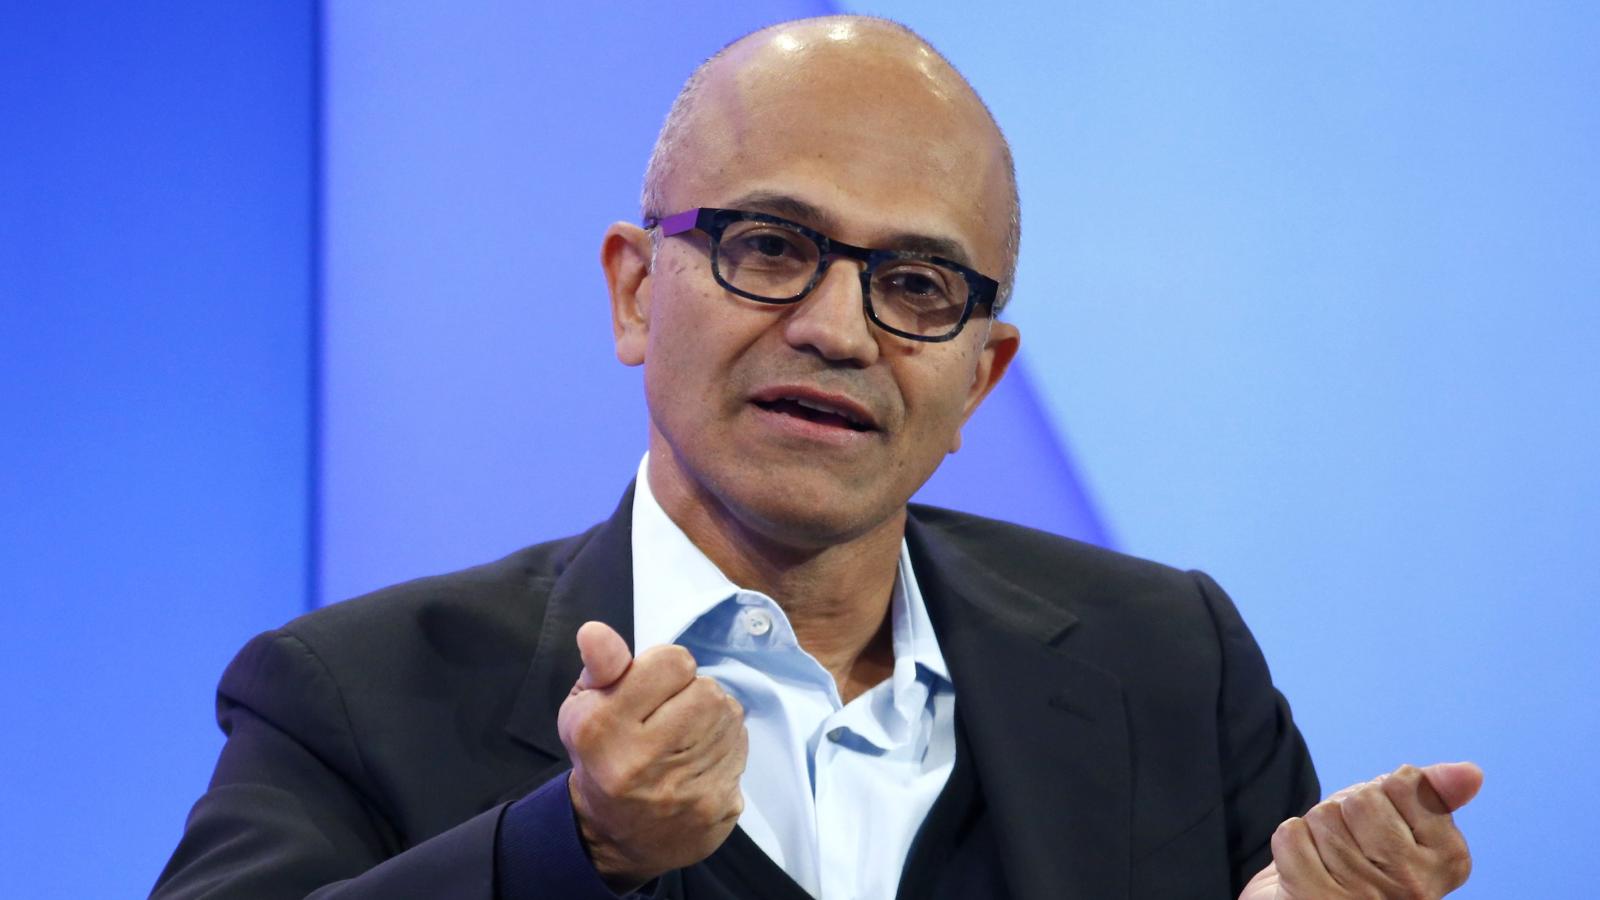 Microsoft CEO Satya Nadella's new book Hit Refresh rewrites